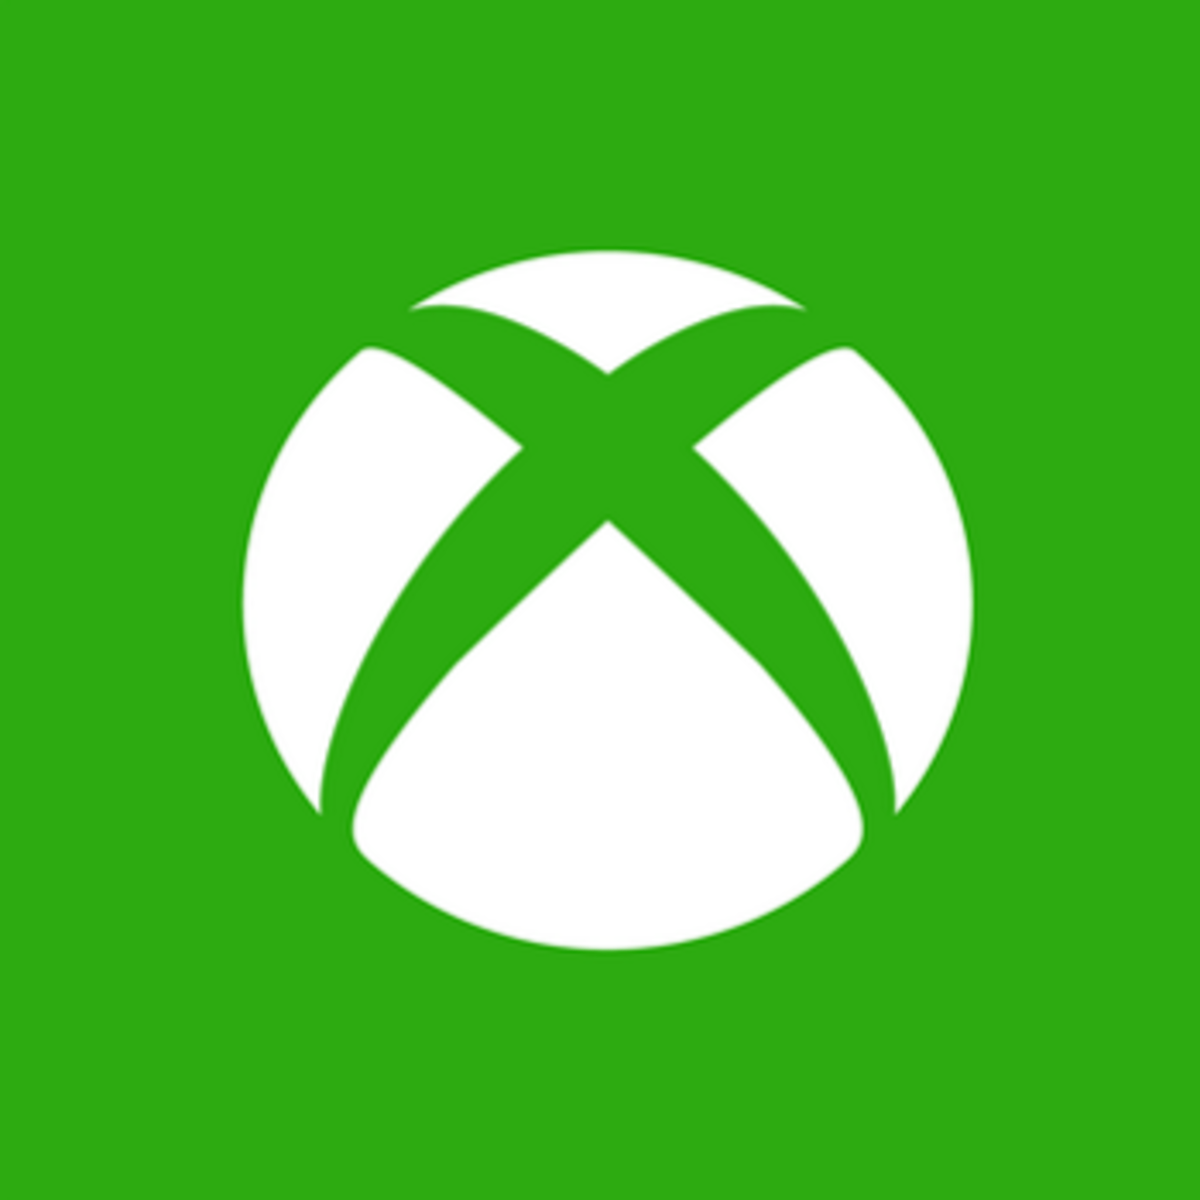 Microsoft Xbox Logo - Xbox hardware revenue down 29% after fall in Q4 sales - MCV